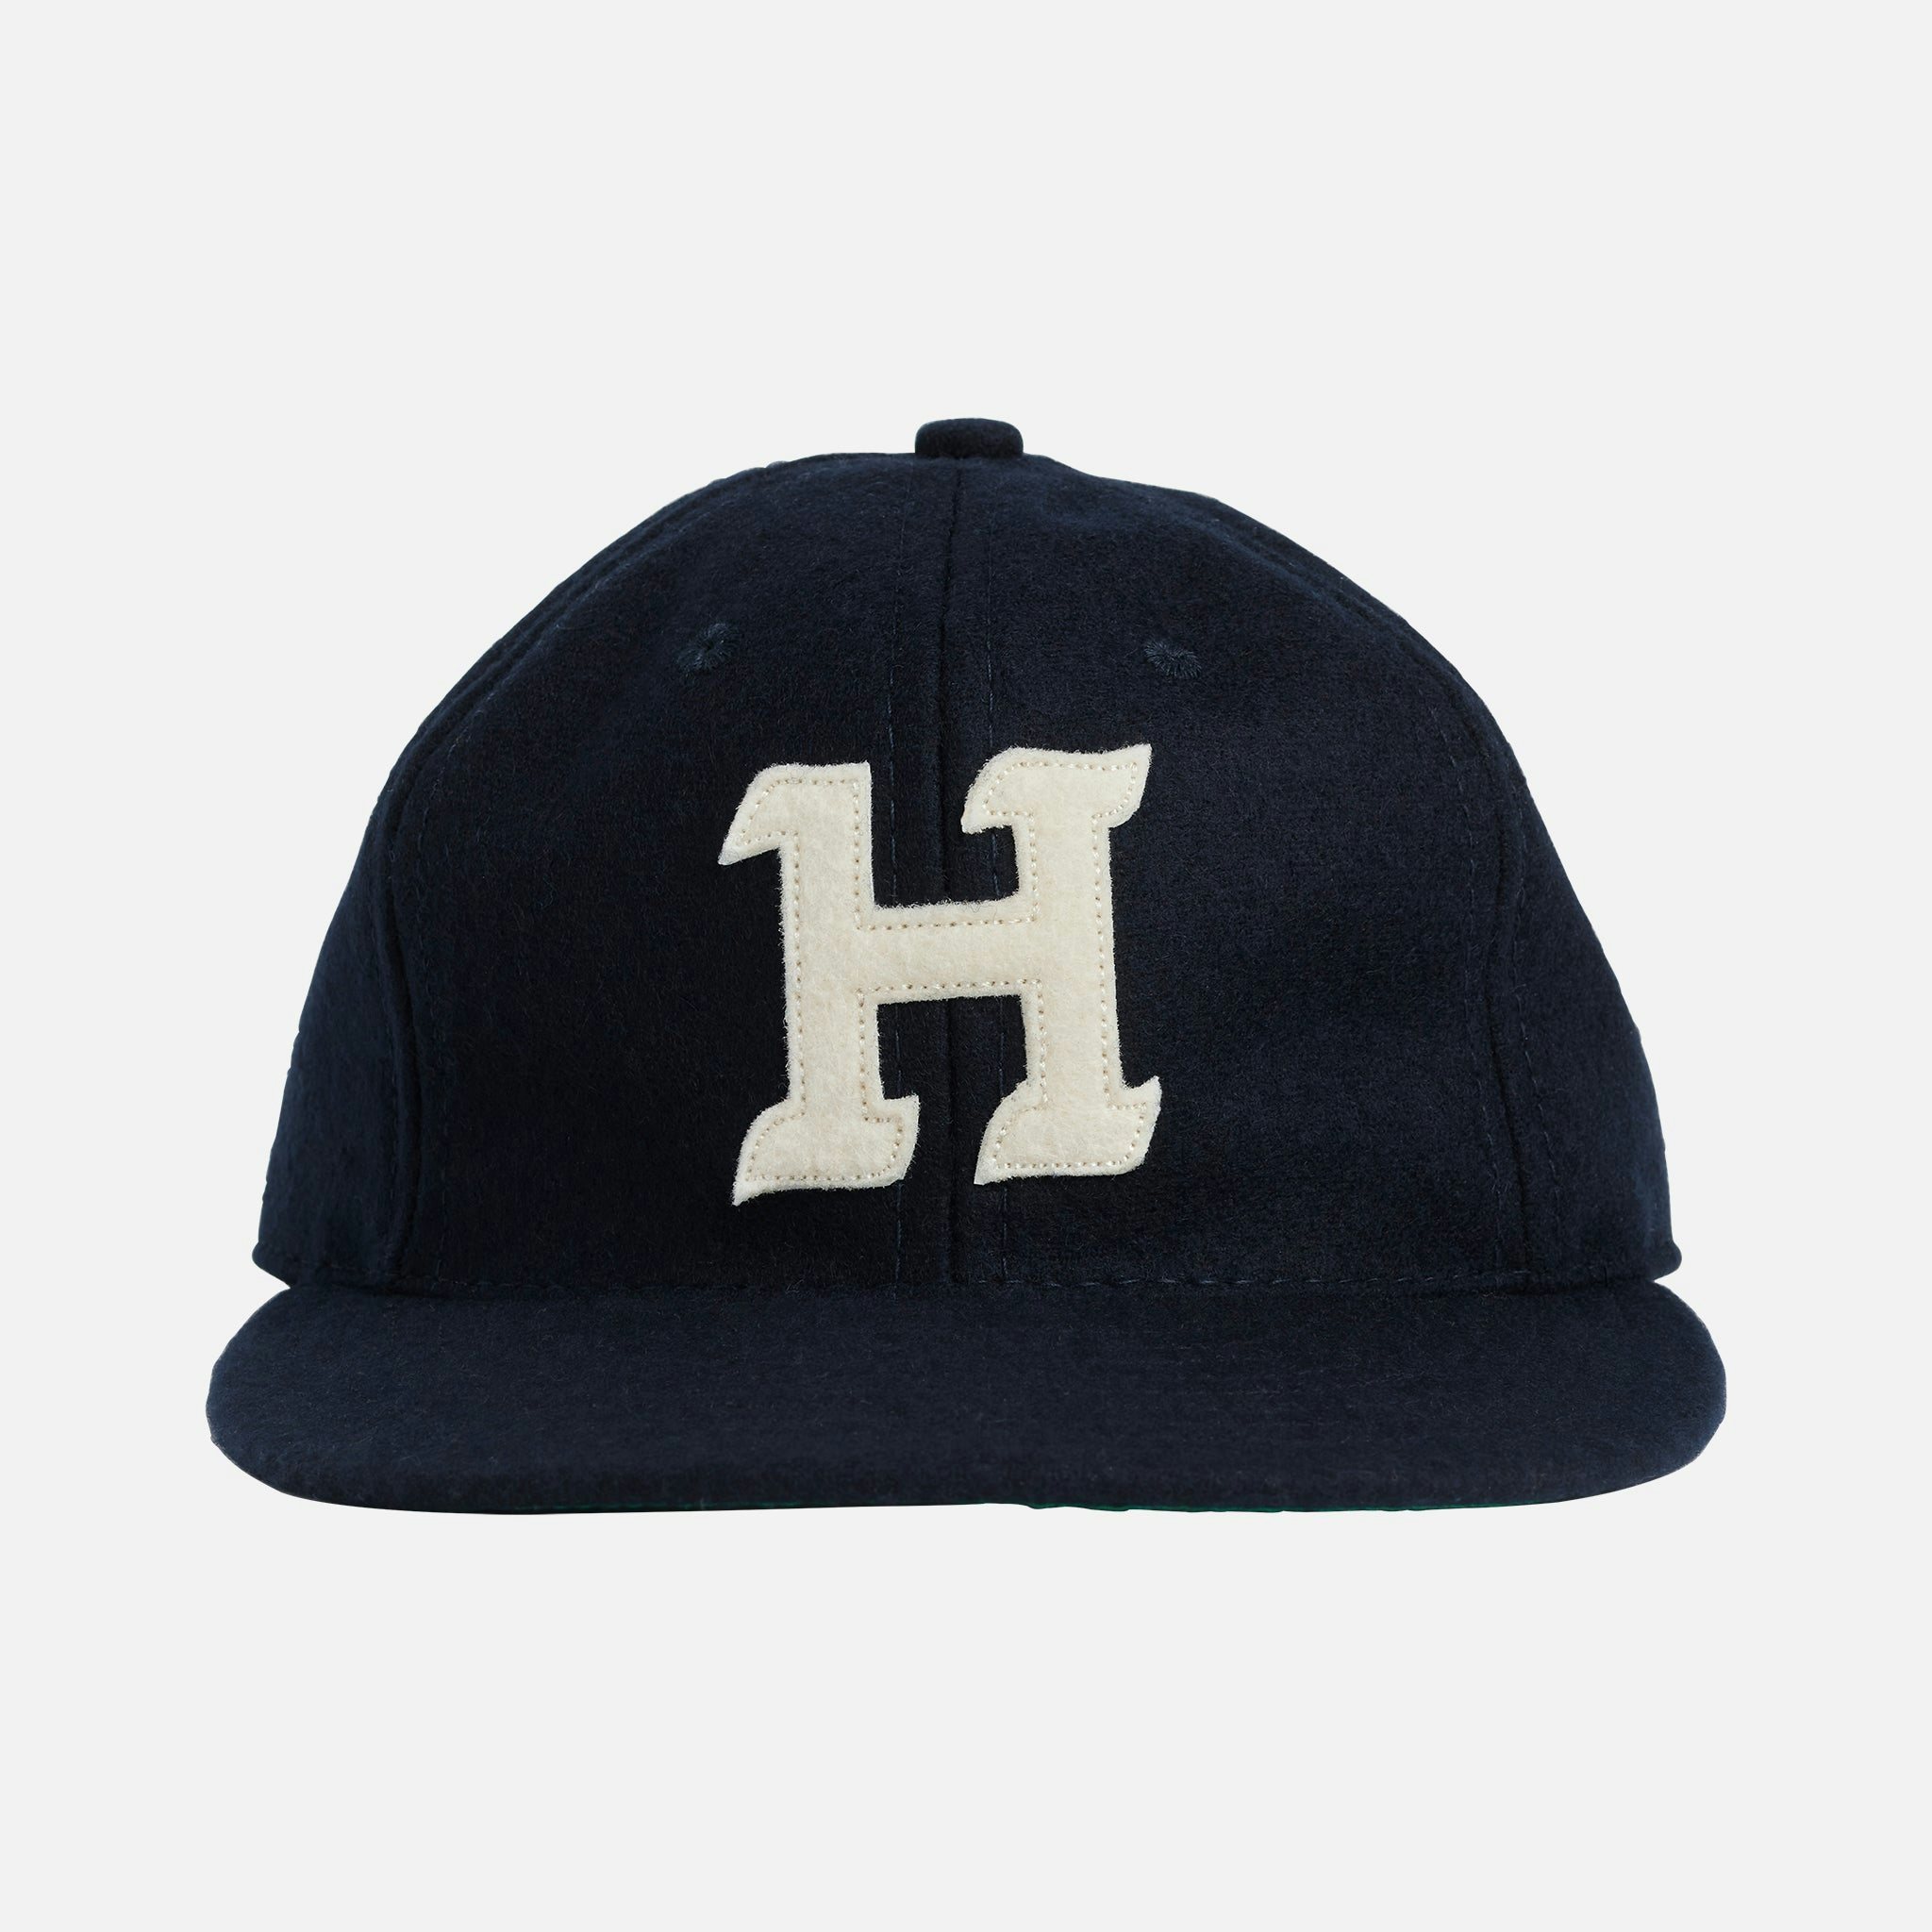 Hodinkee 6-Panel Hat in Navy Wool – HODINKEE Shop